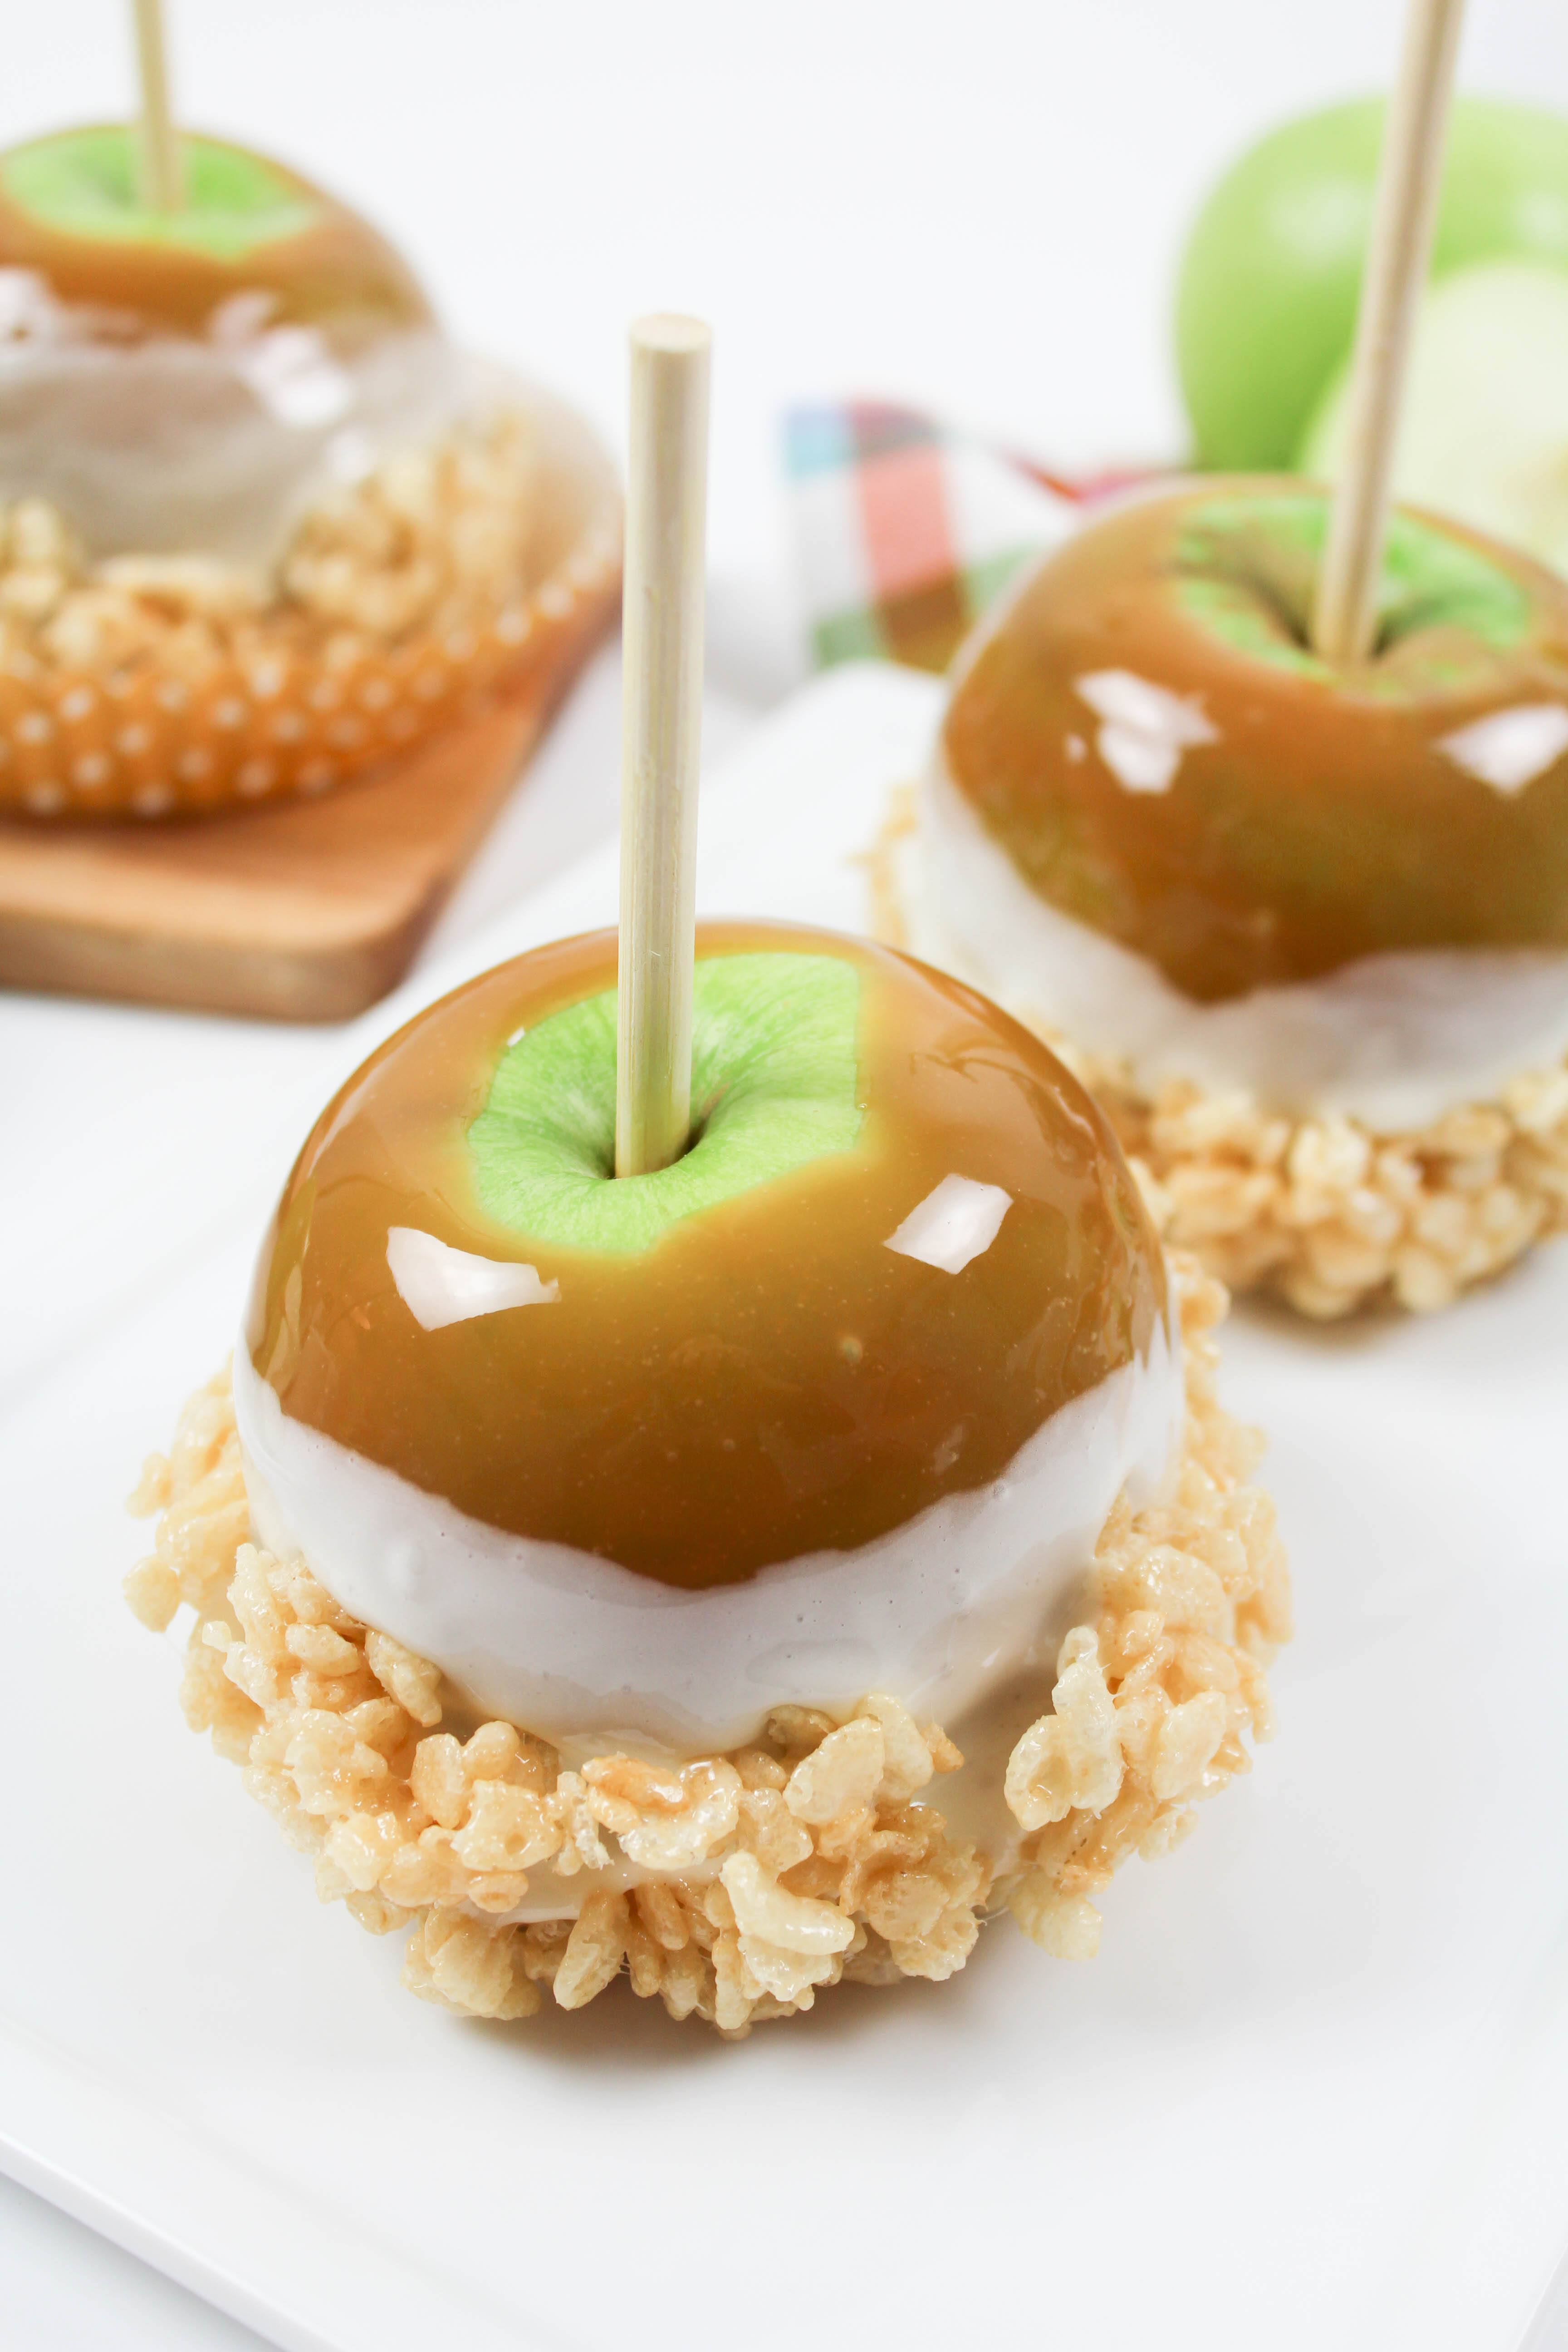 Marshmallow Cereal Treat Caramel Apples - Let's Mingle Blog